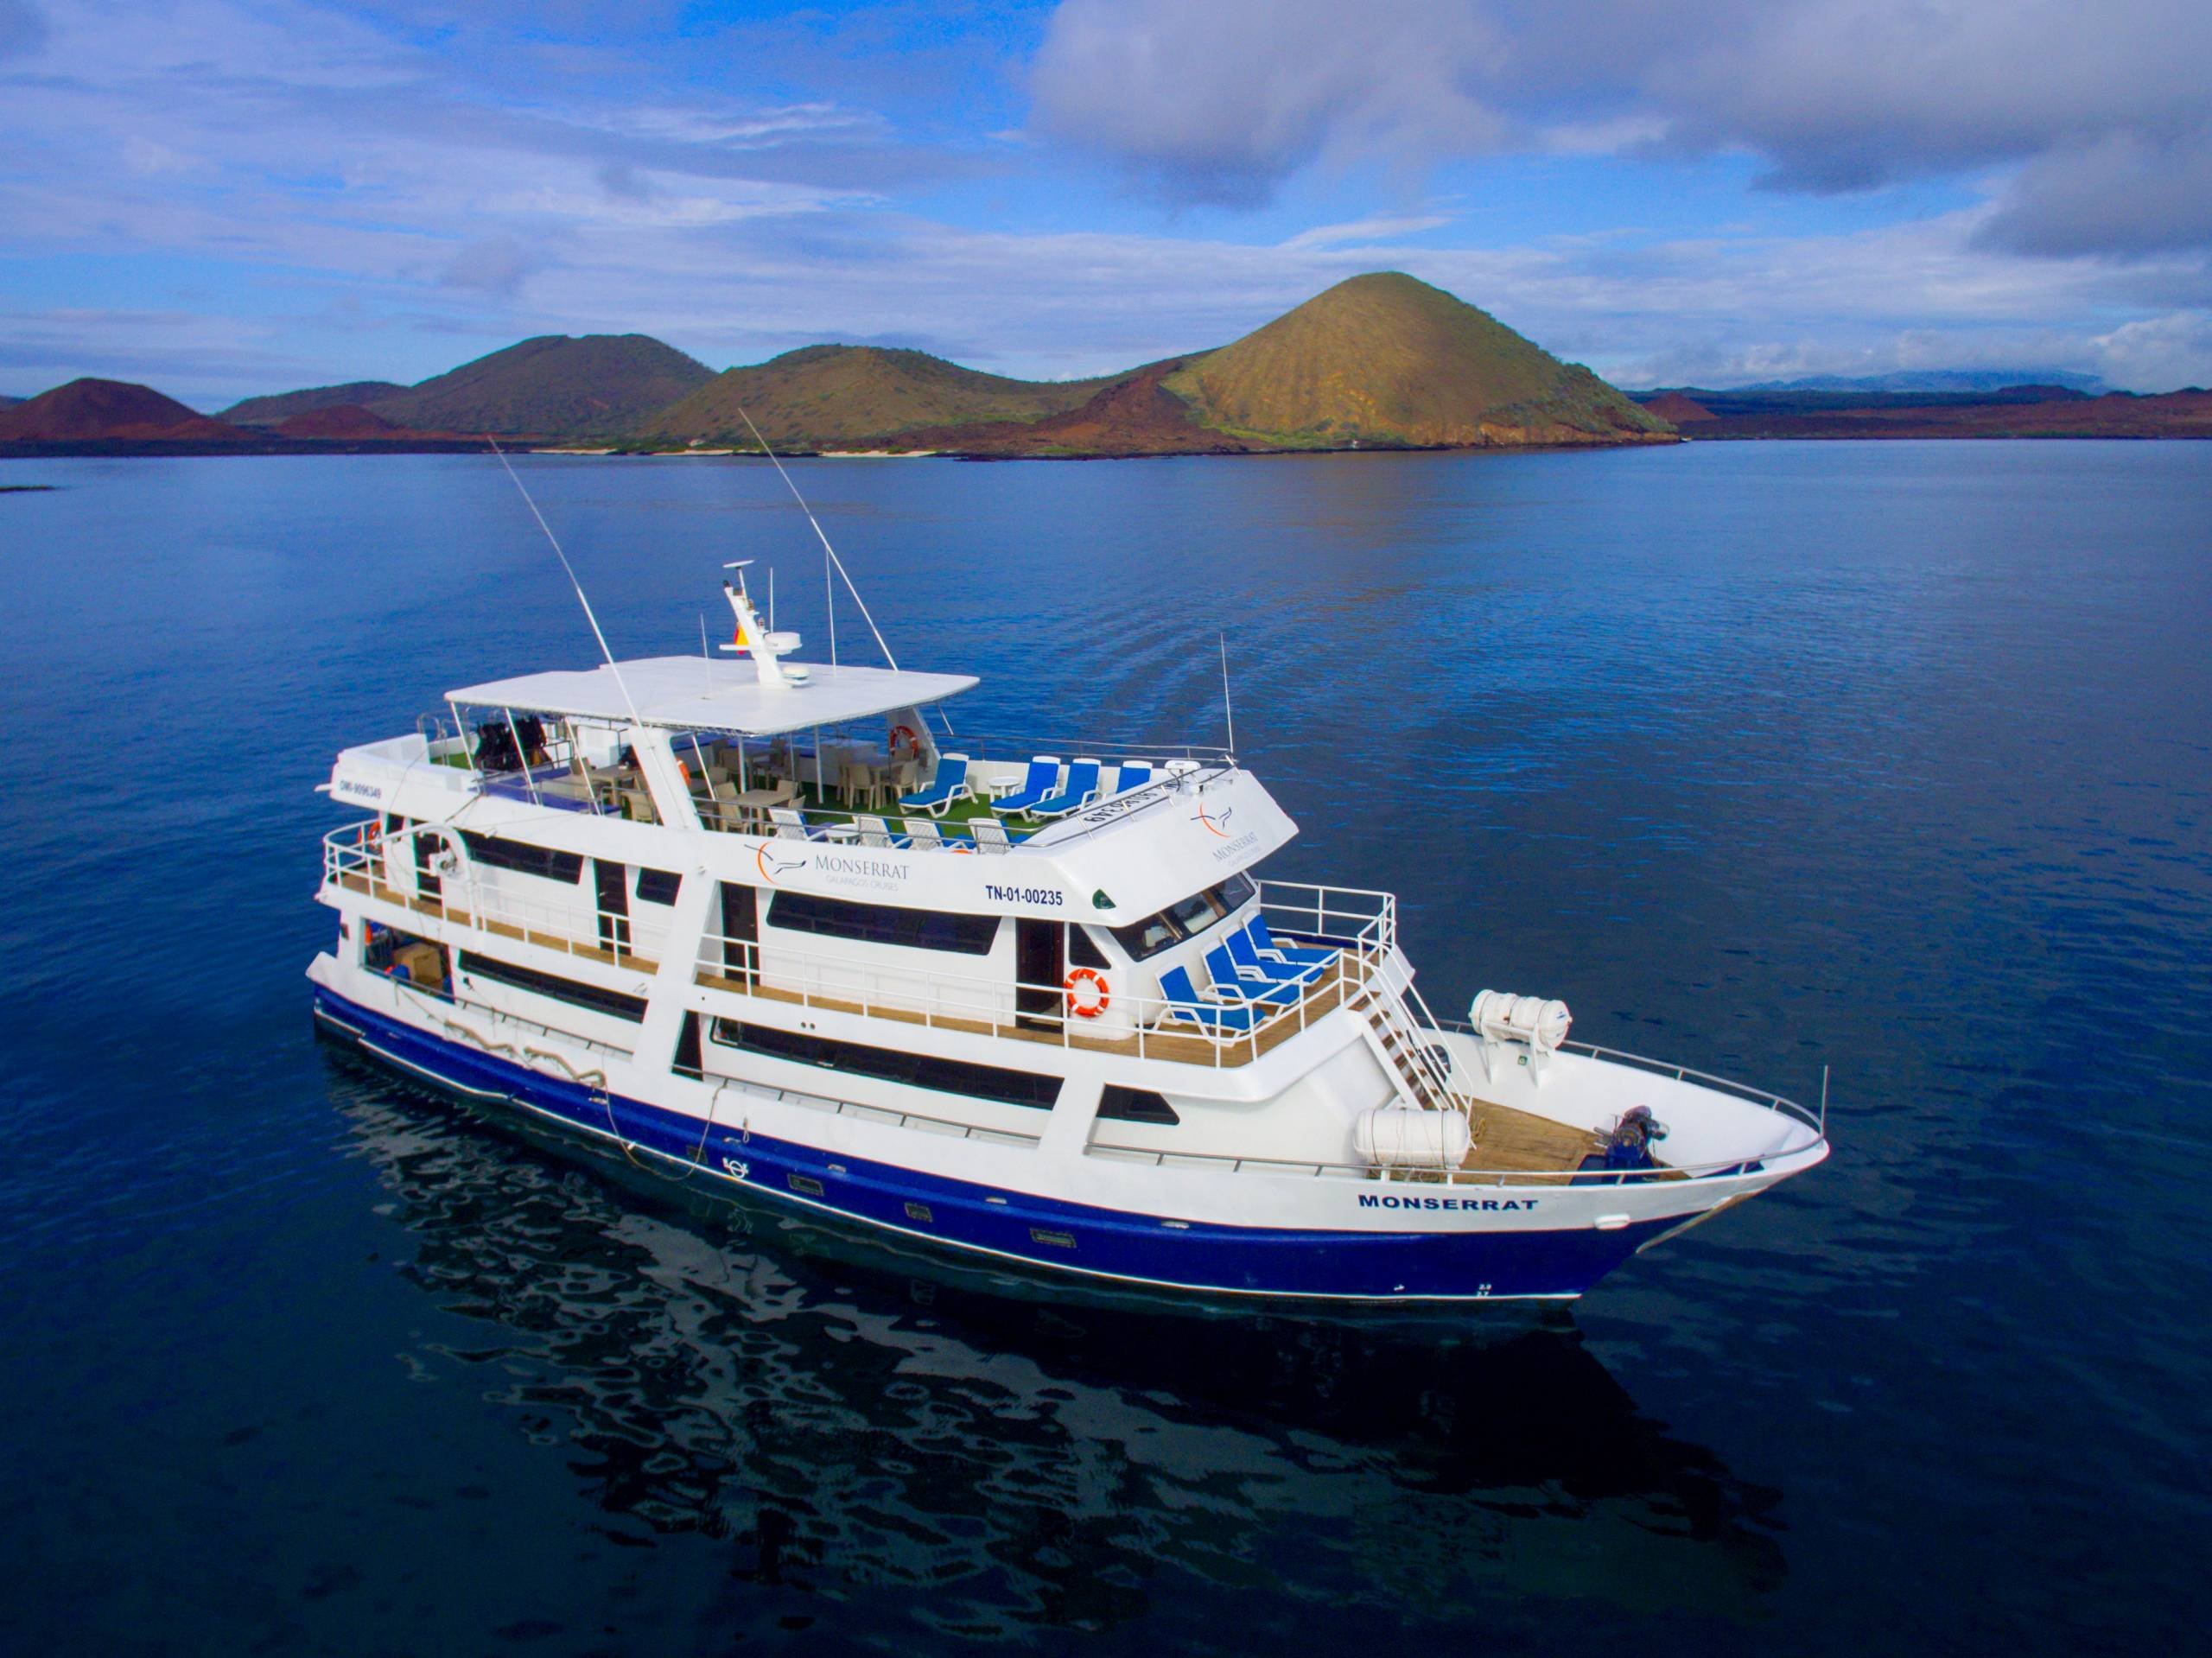 Monserrat Yacht, Galapagos